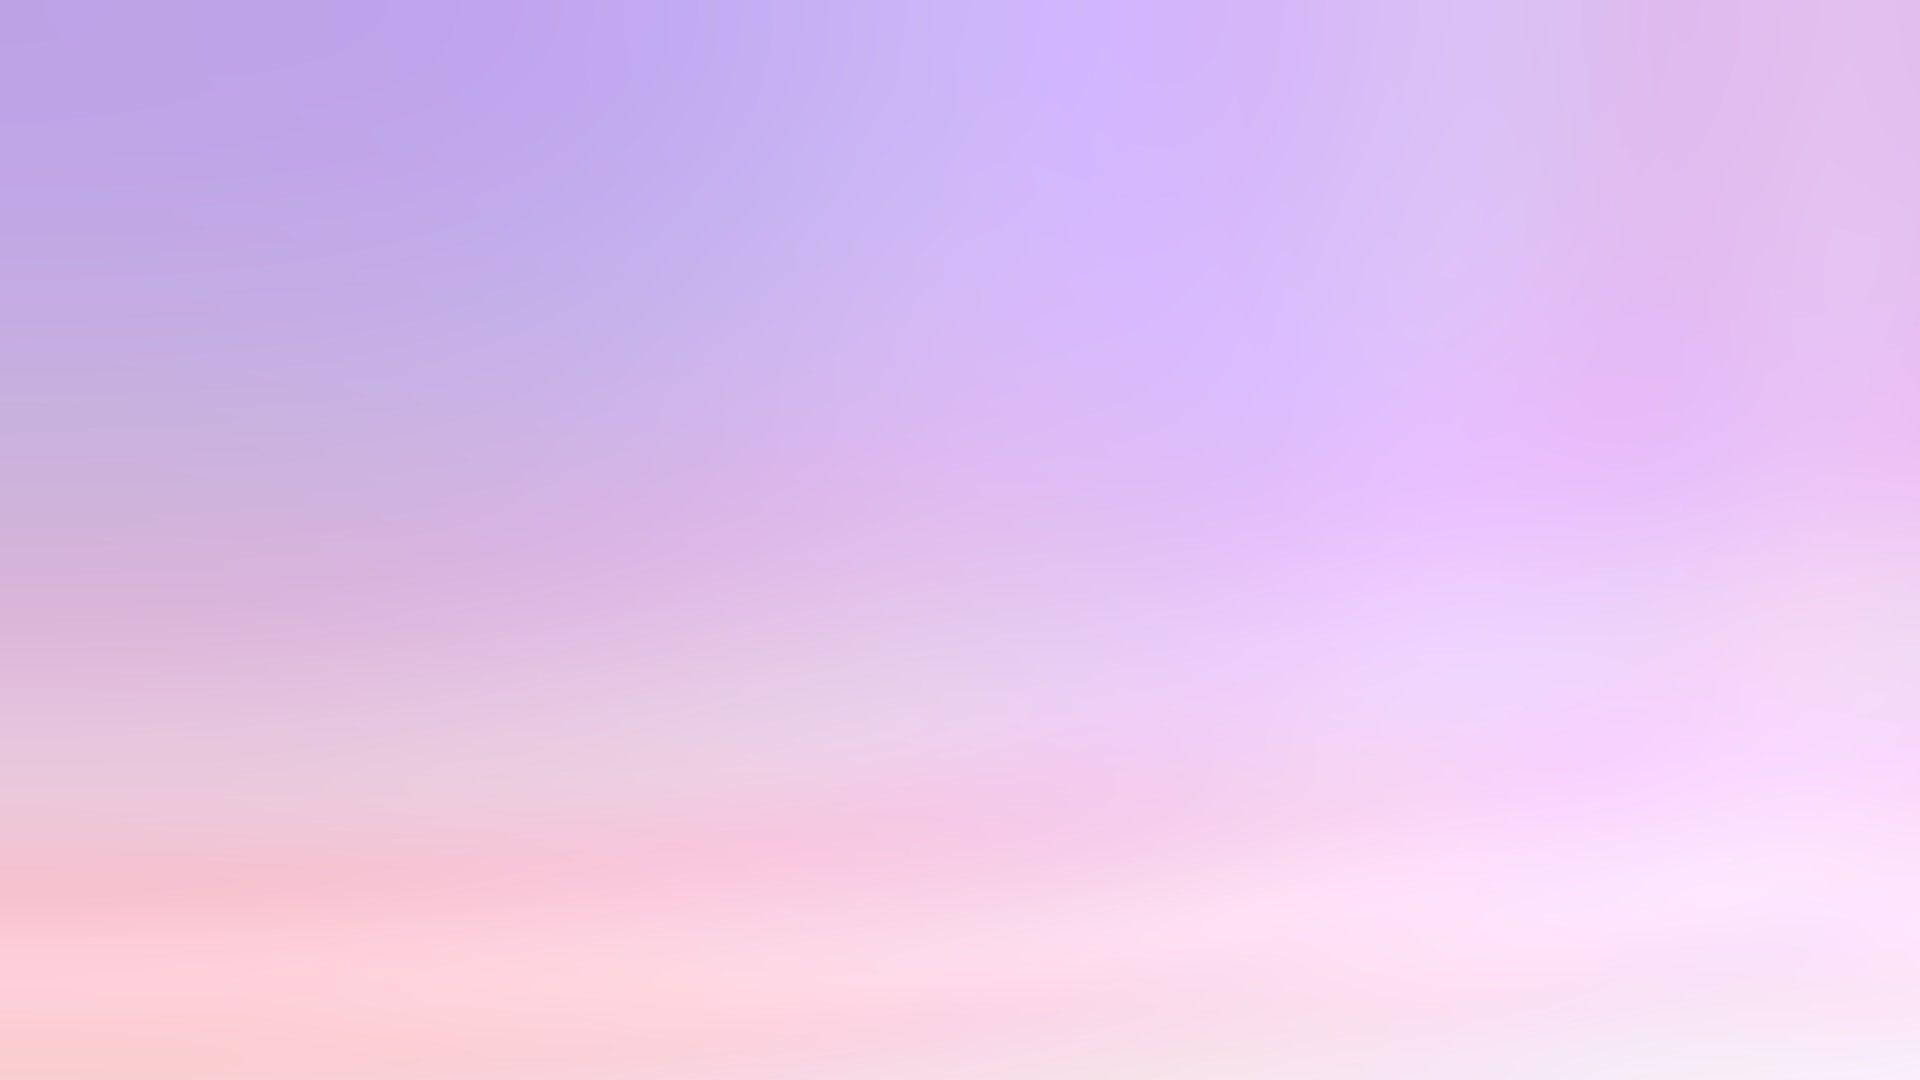 Pink And Purple Gradient Pastel Aesthetic Tumblr Laptop